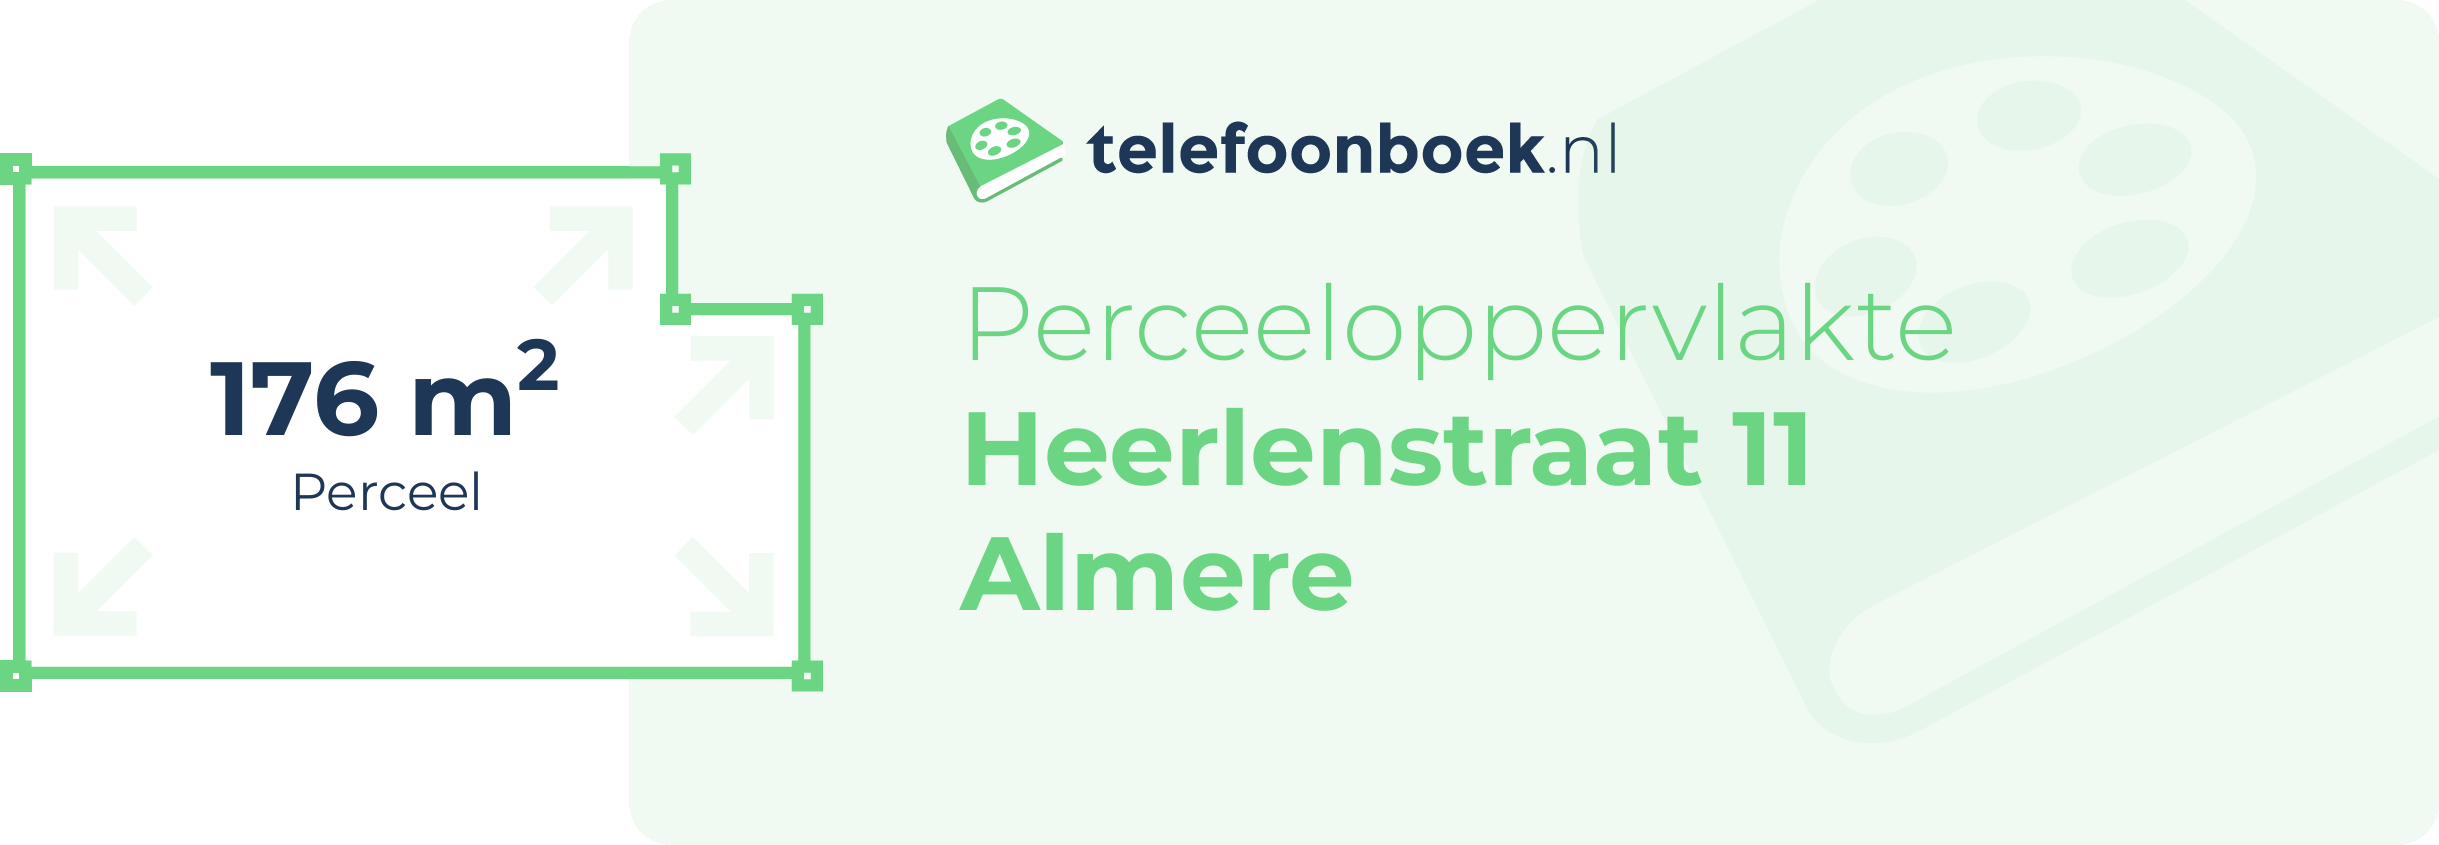 Perceeloppervlakte Heerlenstraat 11 Almere